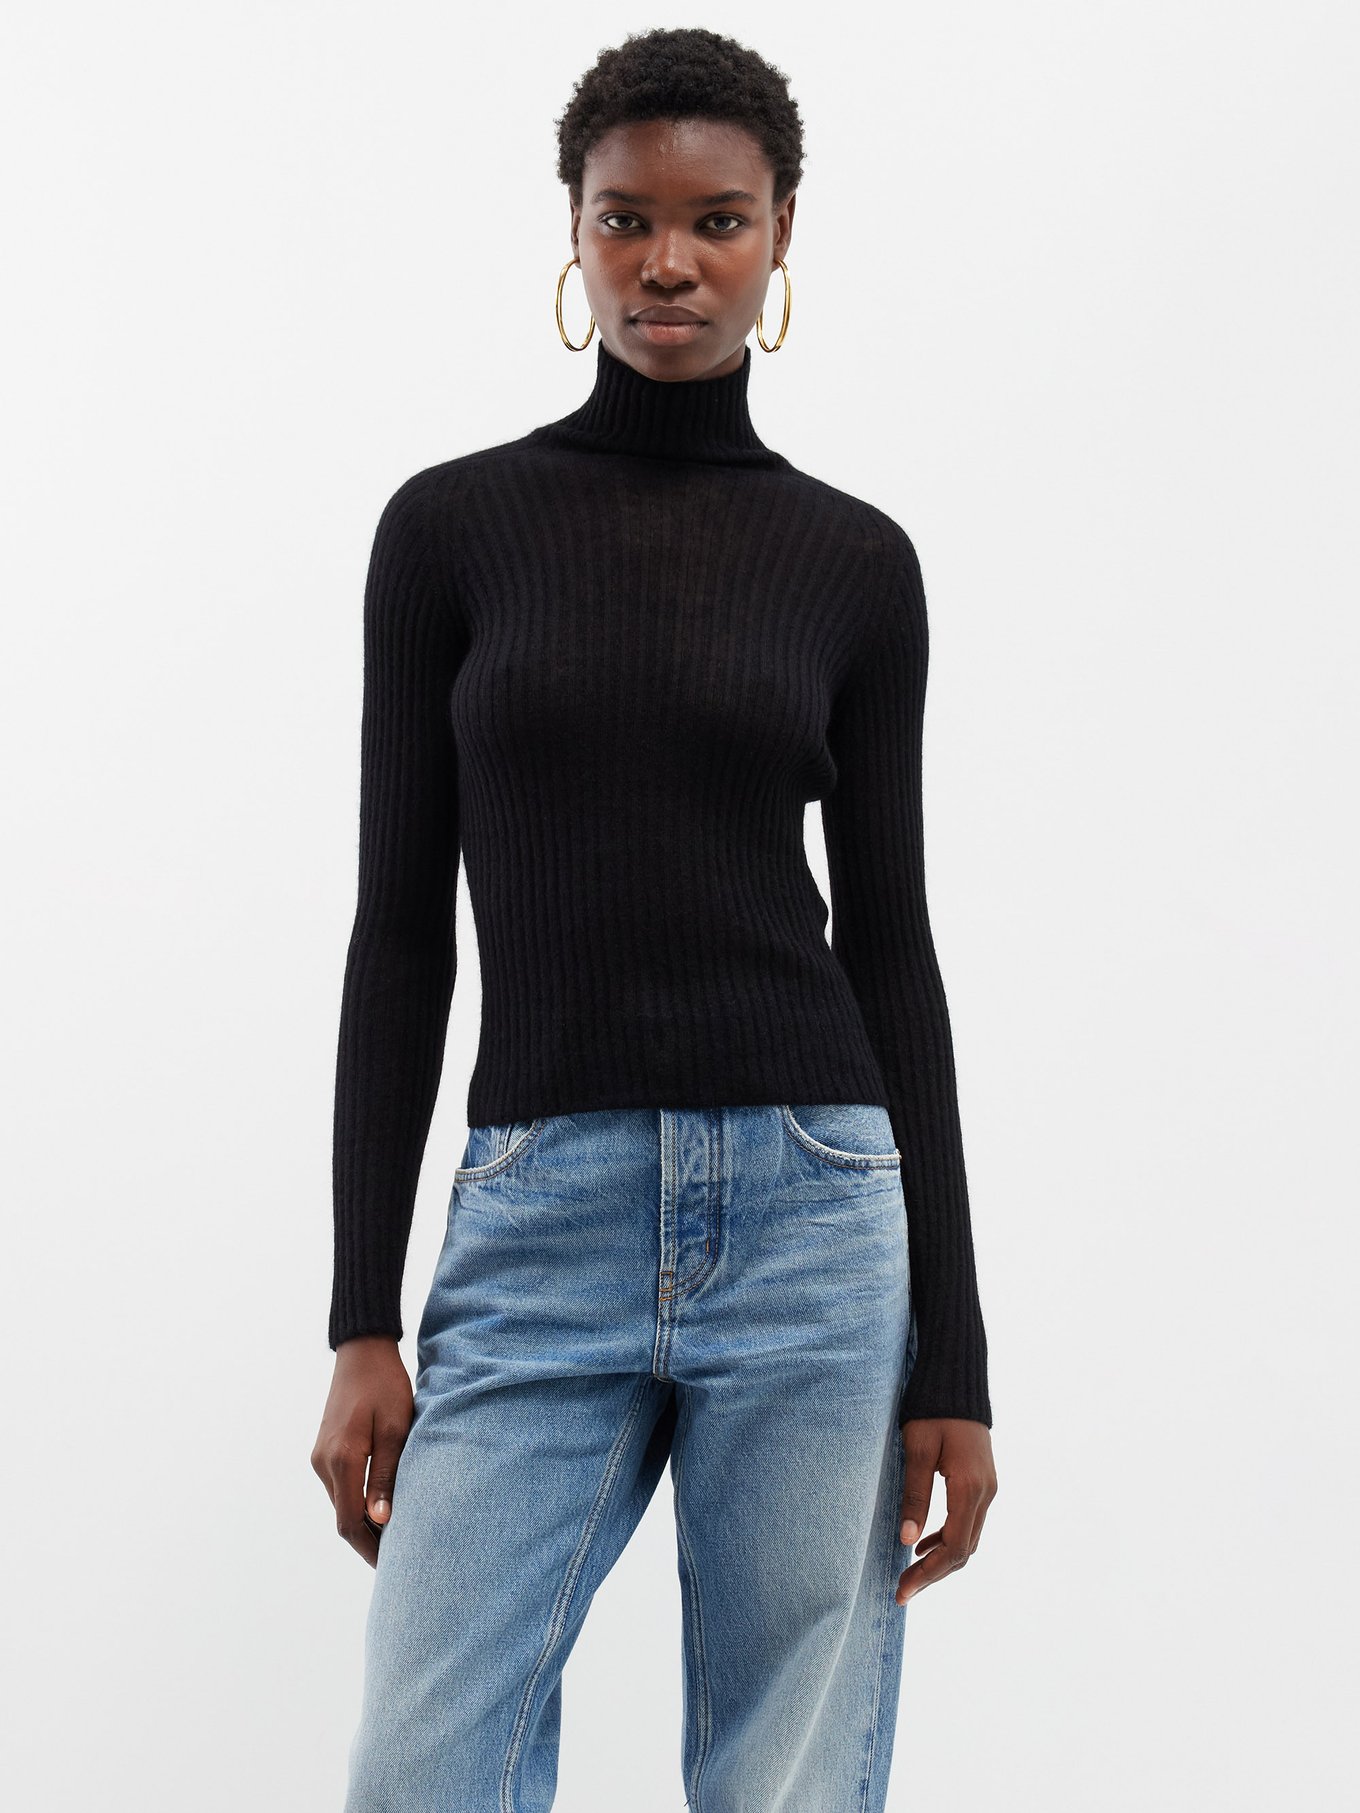 Saint Laurent high-neck wool jumper - Black